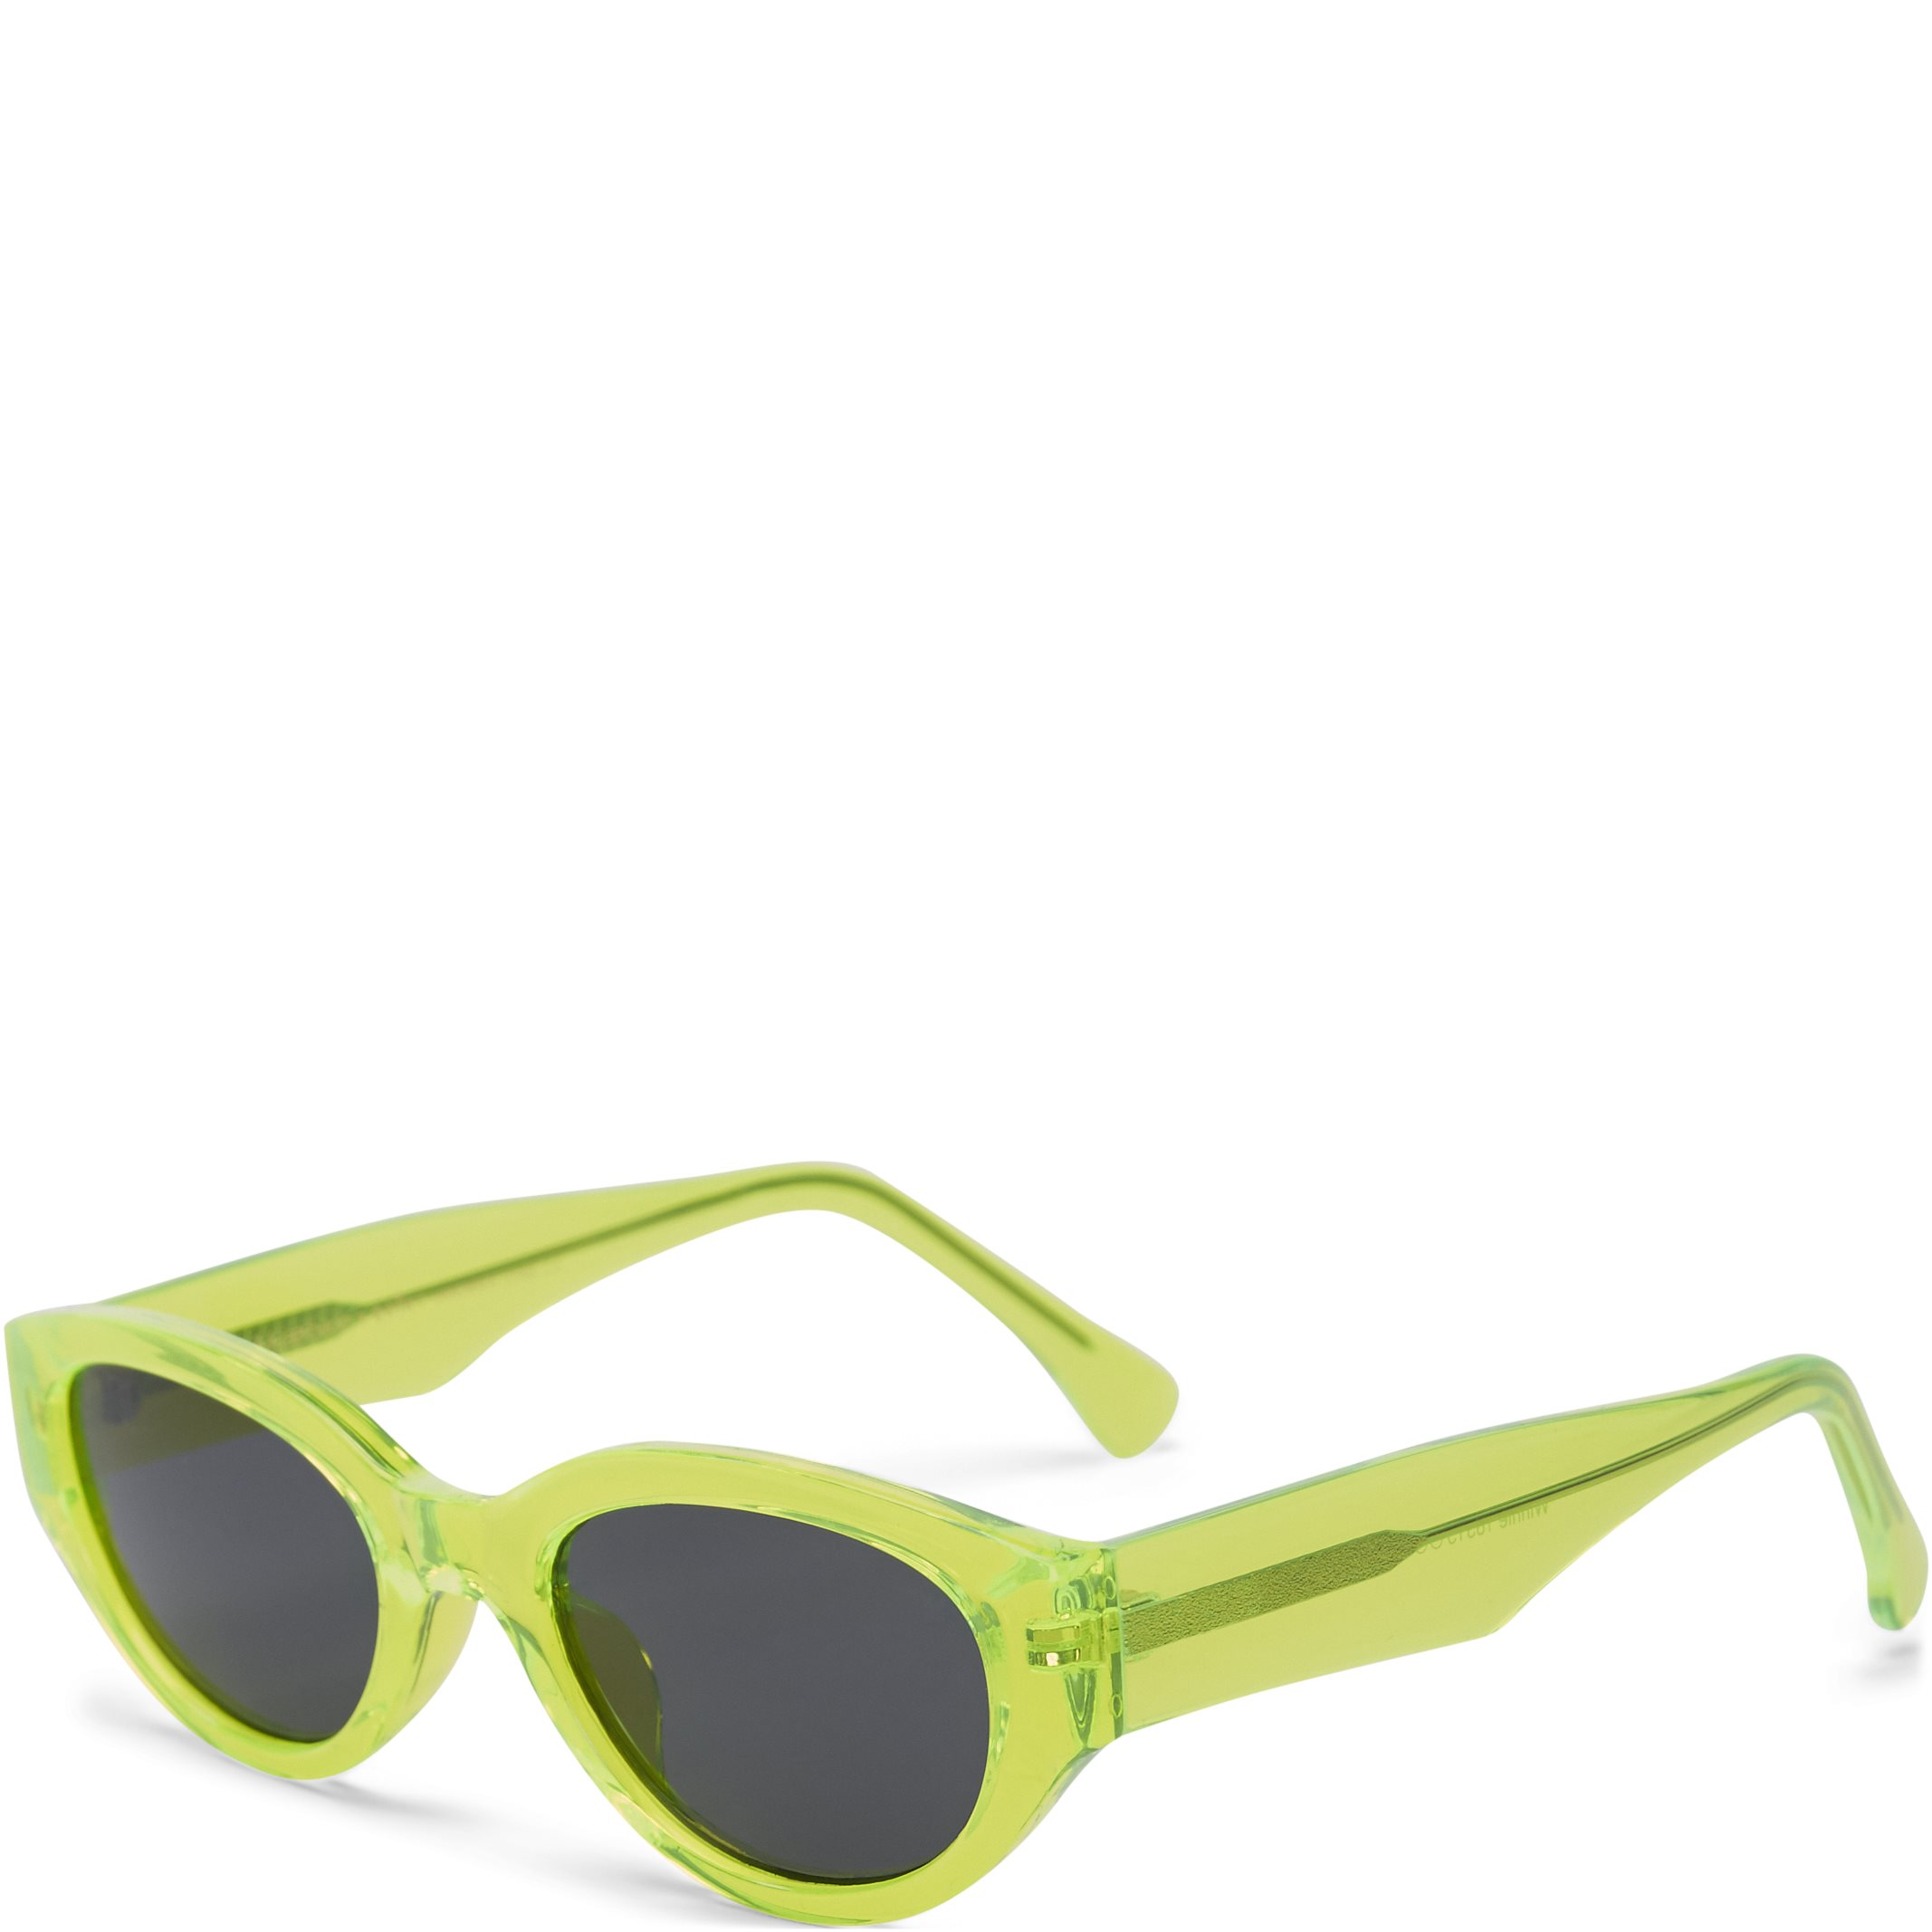 Winnie solglasögon - Accessoarer - Grön